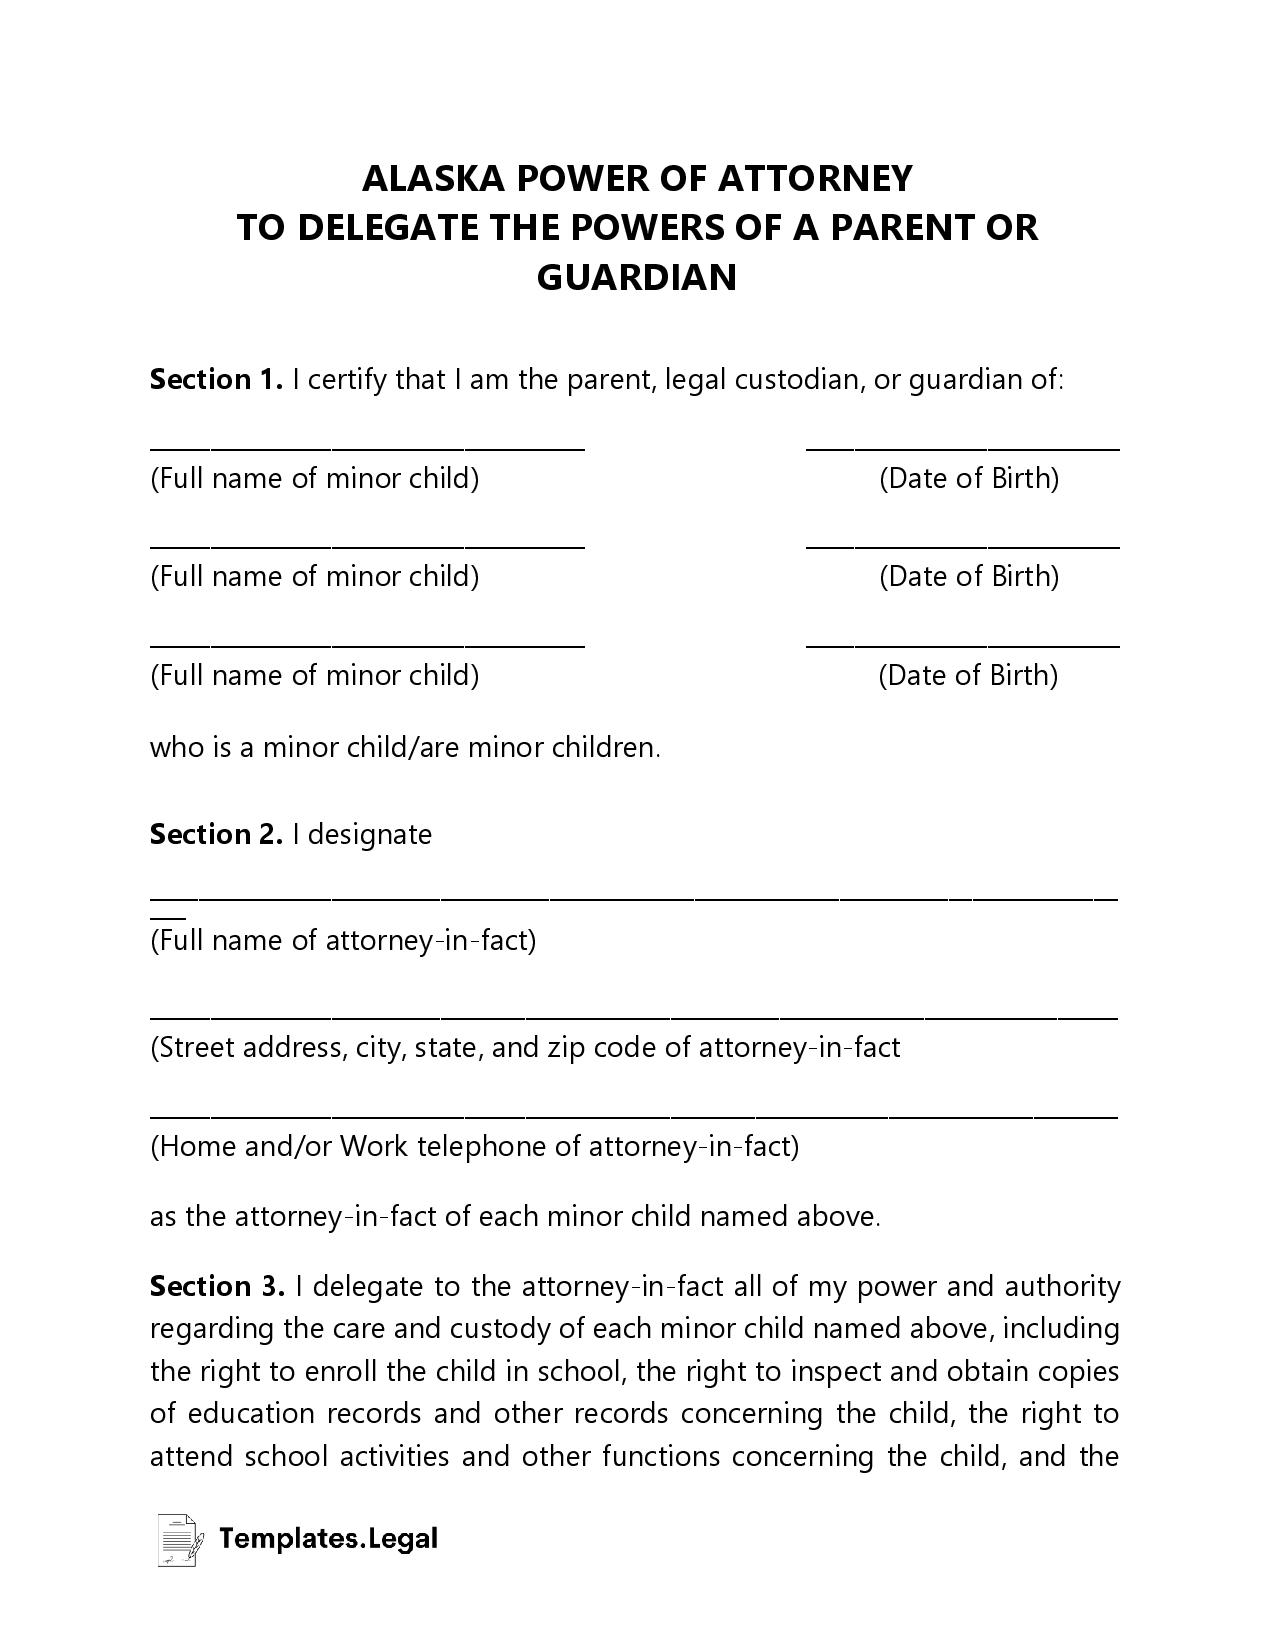 Alaska Minor (Child) Power of Attorney - Templates.Legal